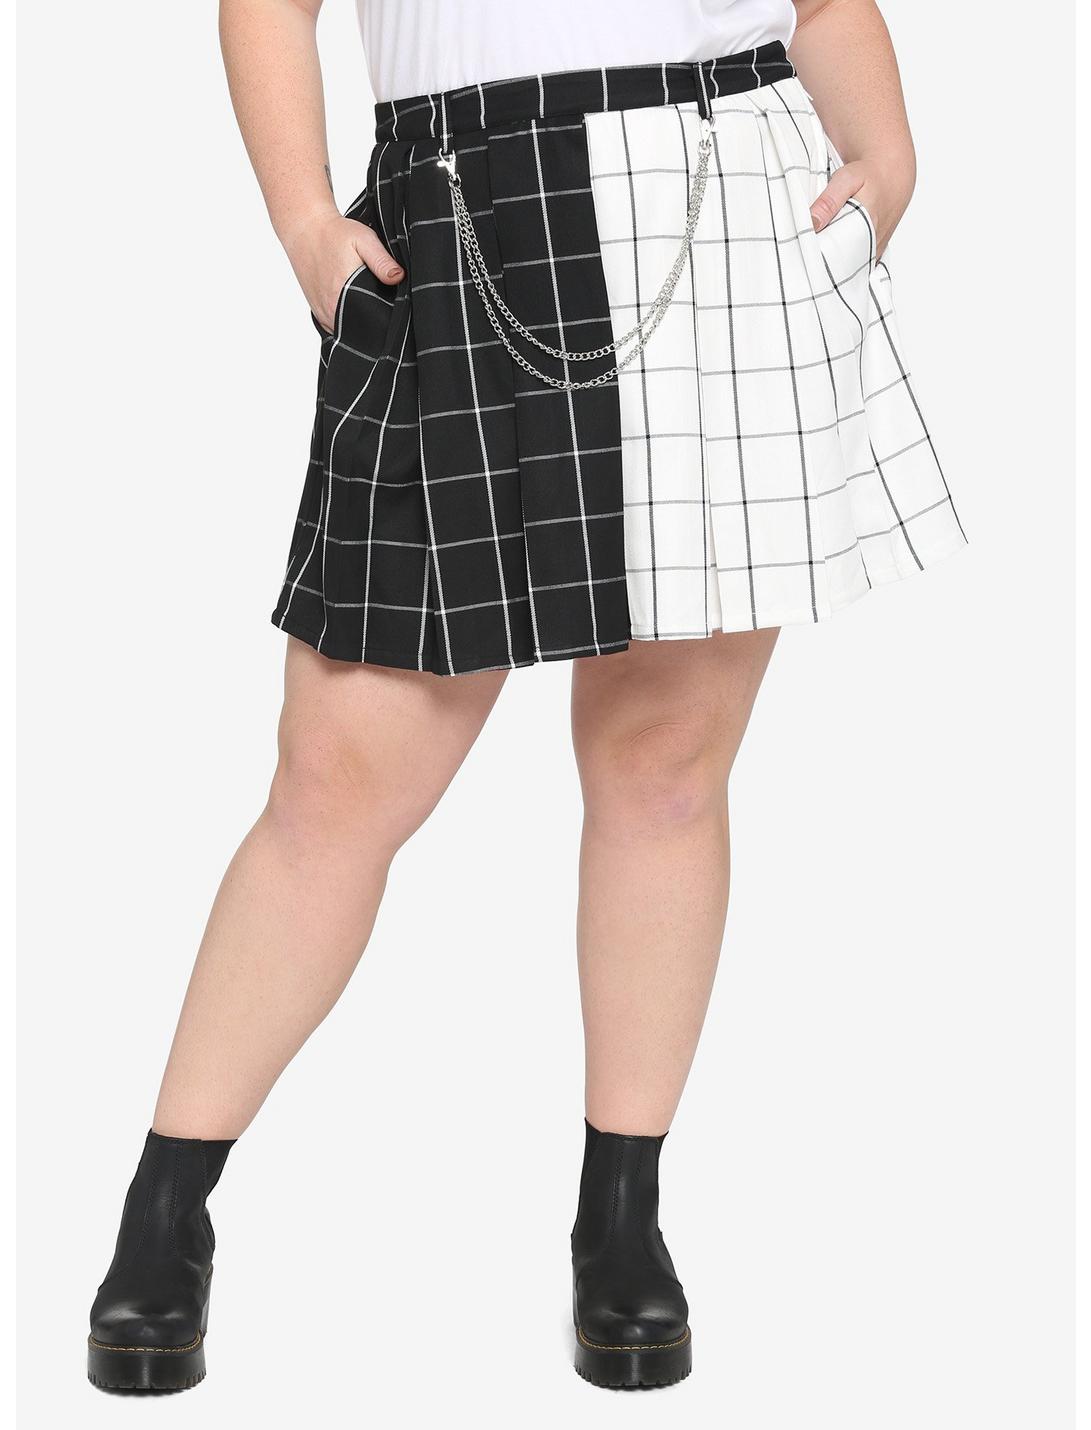 Black & White Split Grid & Chain Skirt Plus Size, PLAID, hi-res